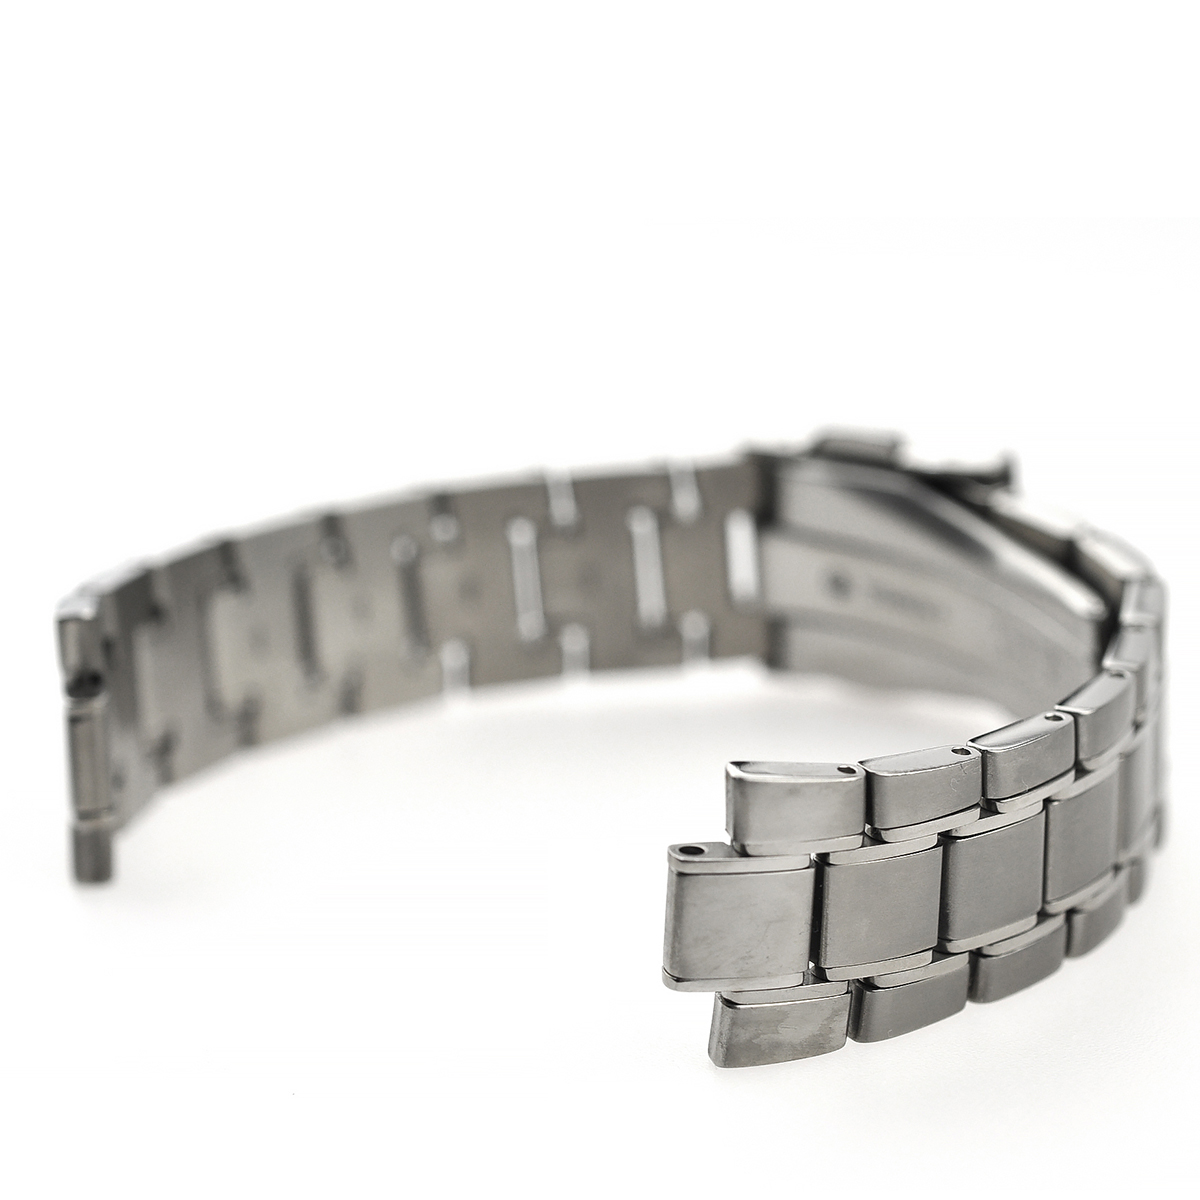 hachigoten | Rakuten Global Market: Watch belt watch band replacement ...